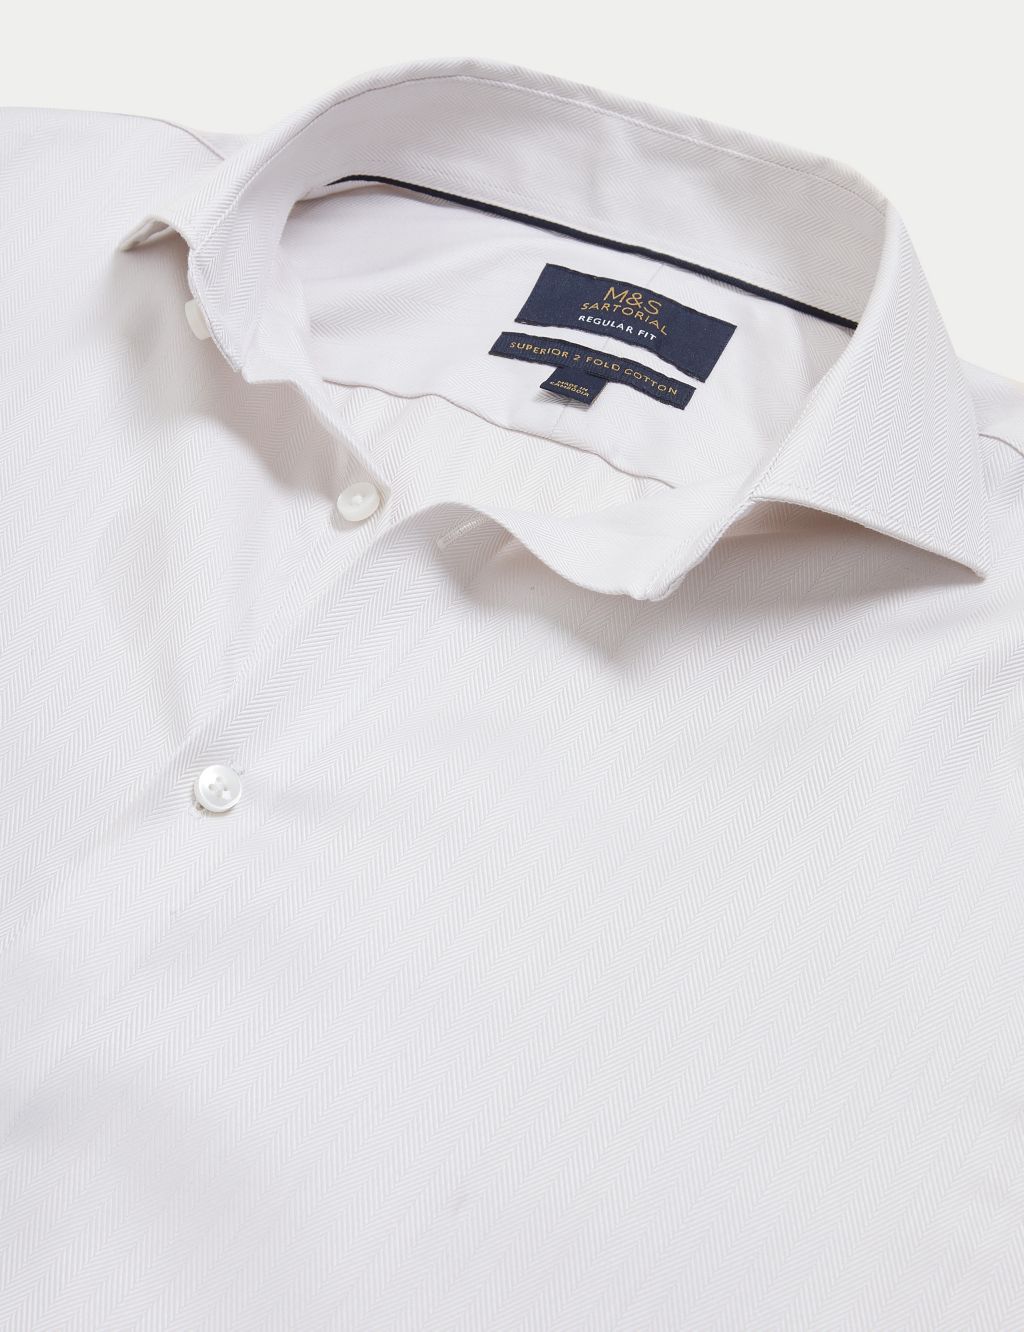 Regular Fit Pure Cotton Herringbone Shirt image 8